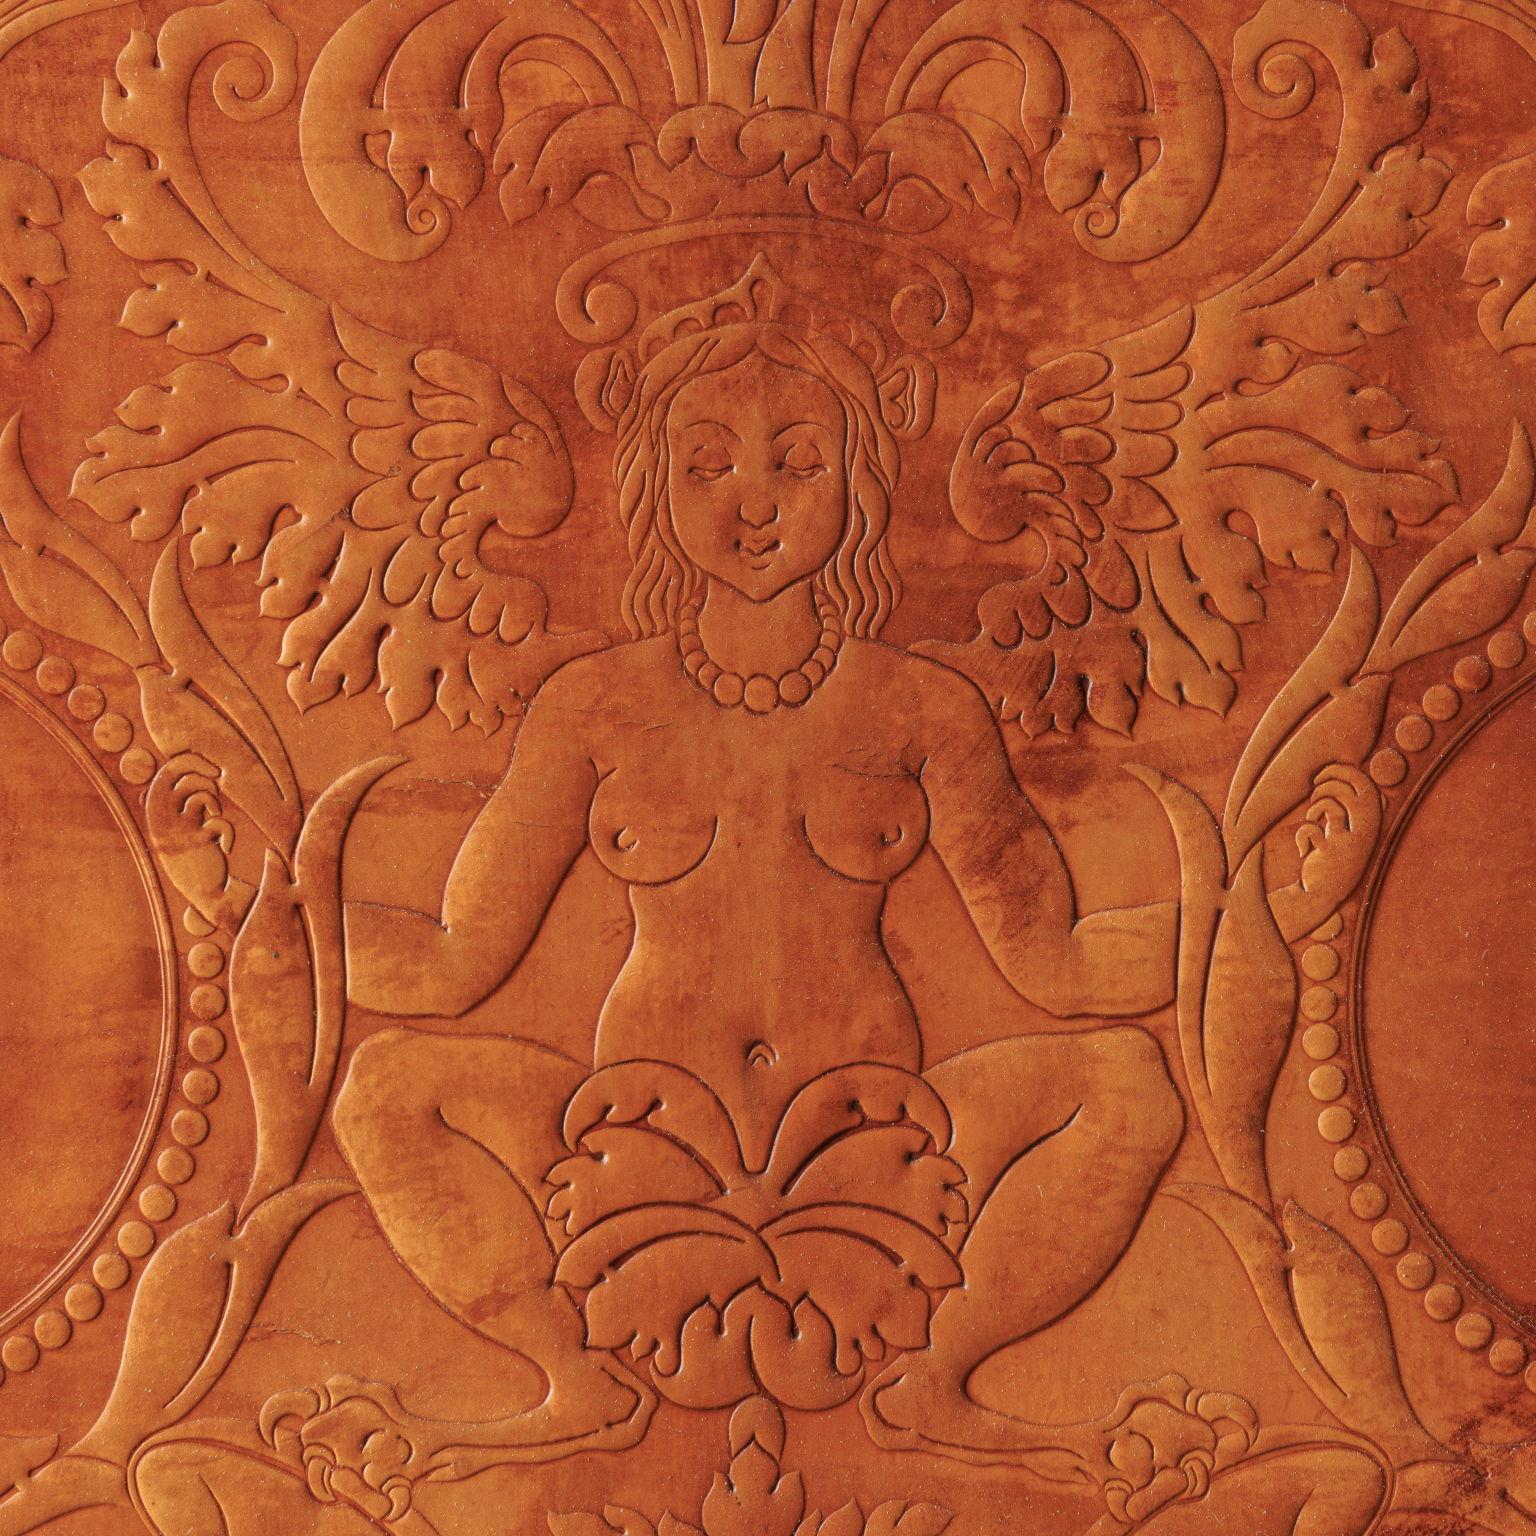 Italian Boiserie panels. 2nd half of the 19th century